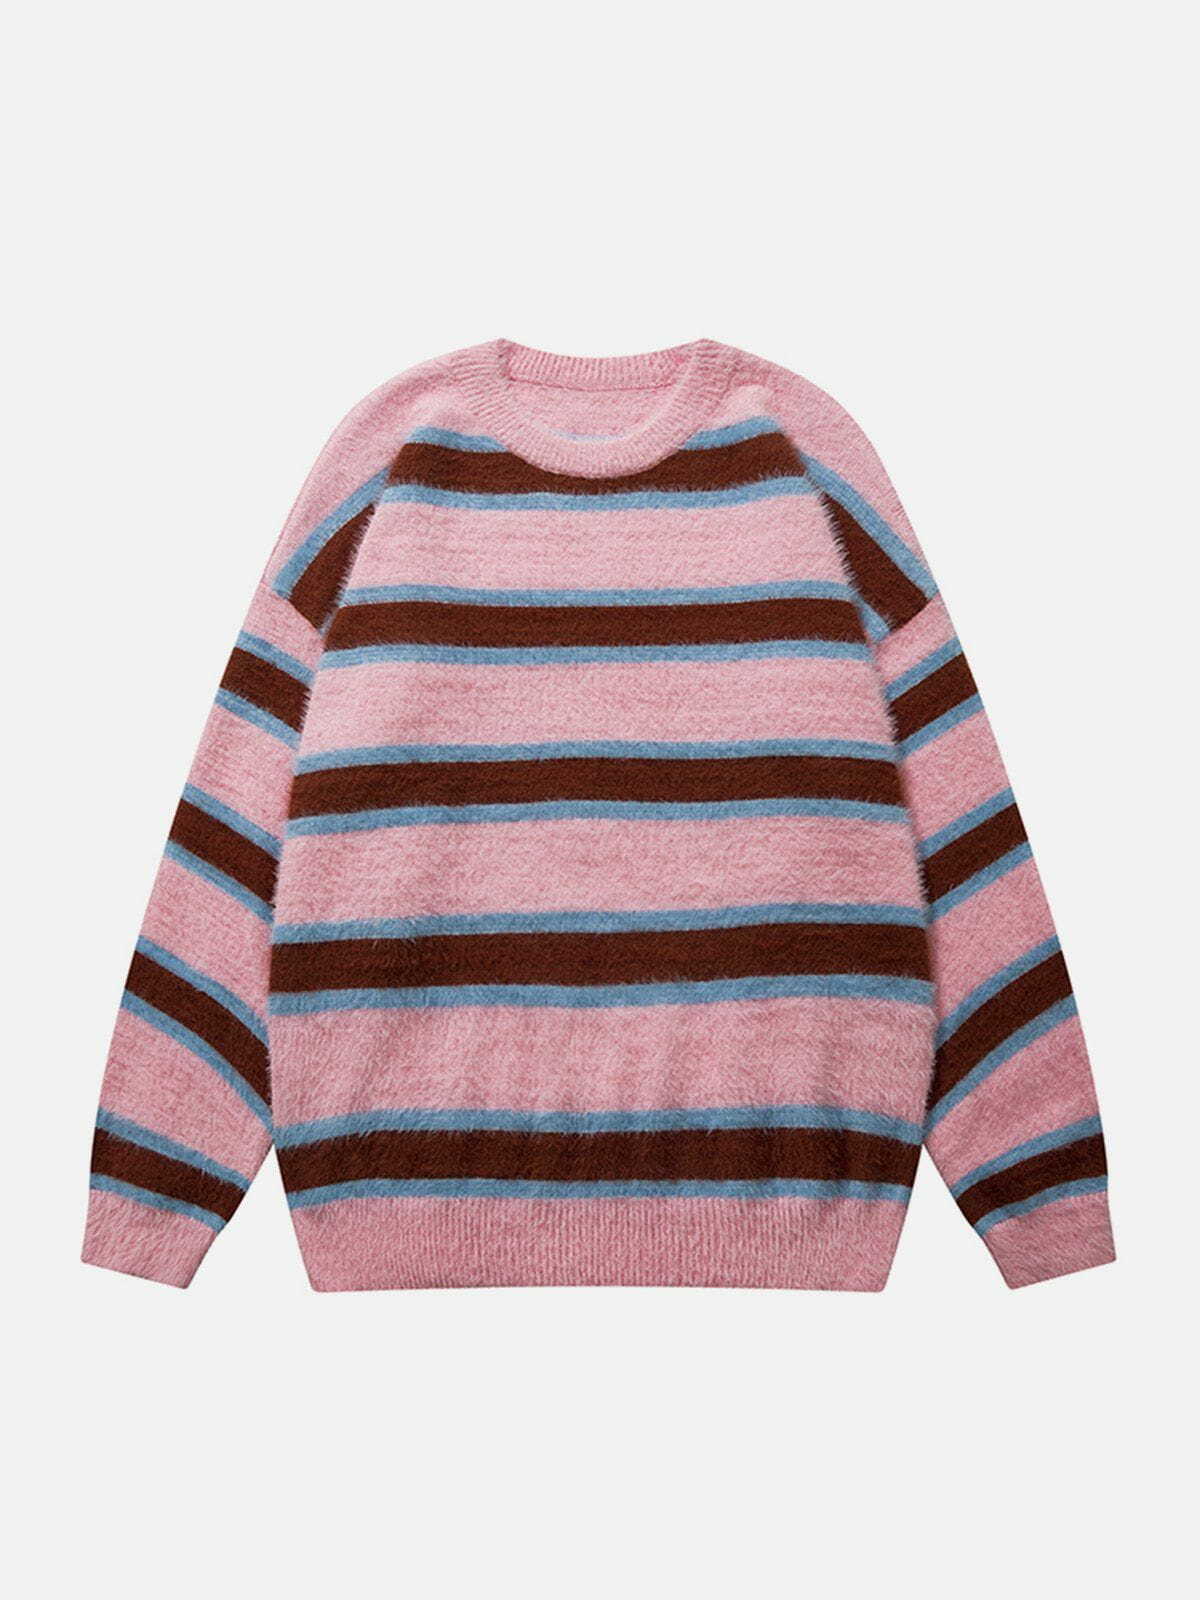 striped jacquard sweater edgy urban knitwear 2958